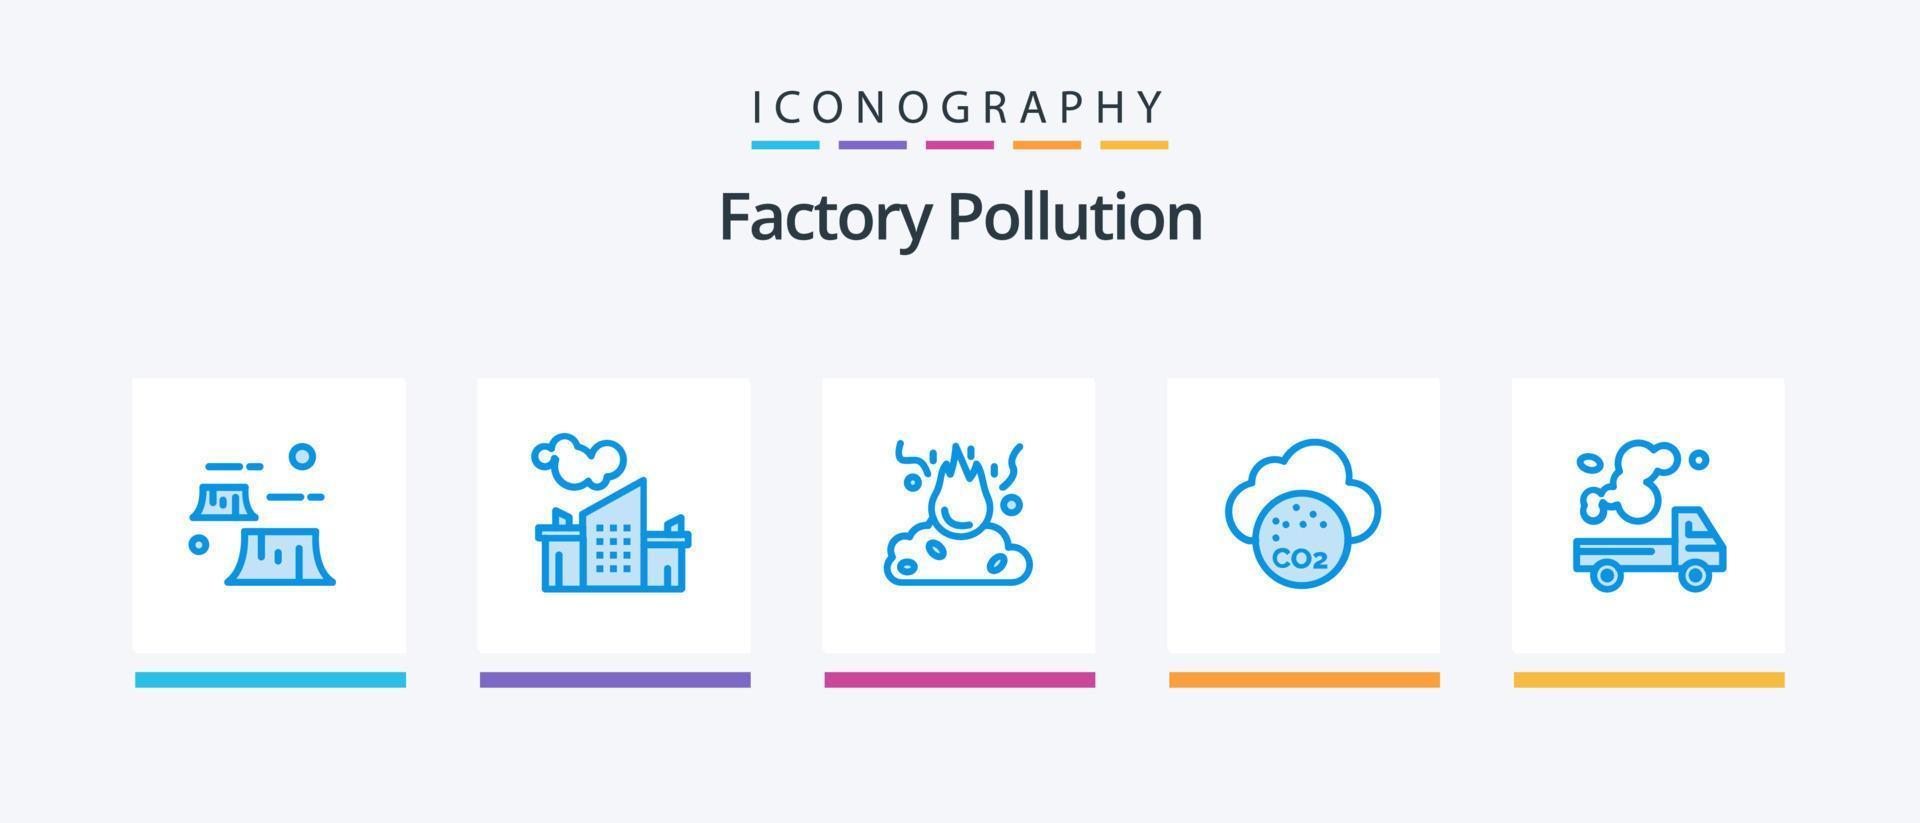 fabriek verontreiniging blauw 5 icoon pak inclusief auto. carbone dioxide. vervuiling. lucht. vervuiling. creatief pictogrammen ontwerp vector